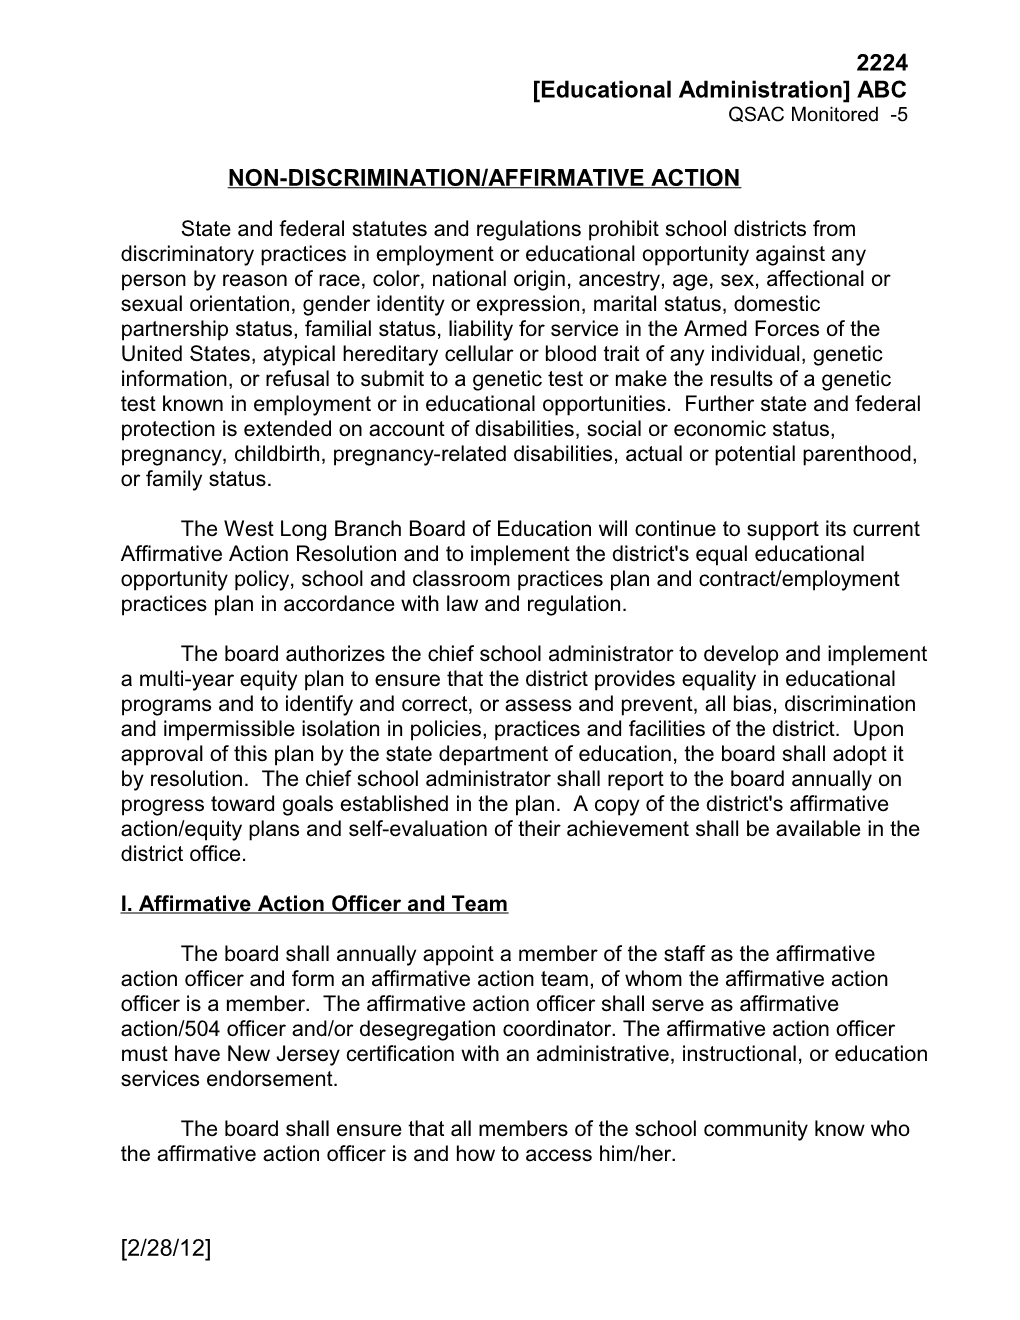 Non-Discrimination/Affirmative Action